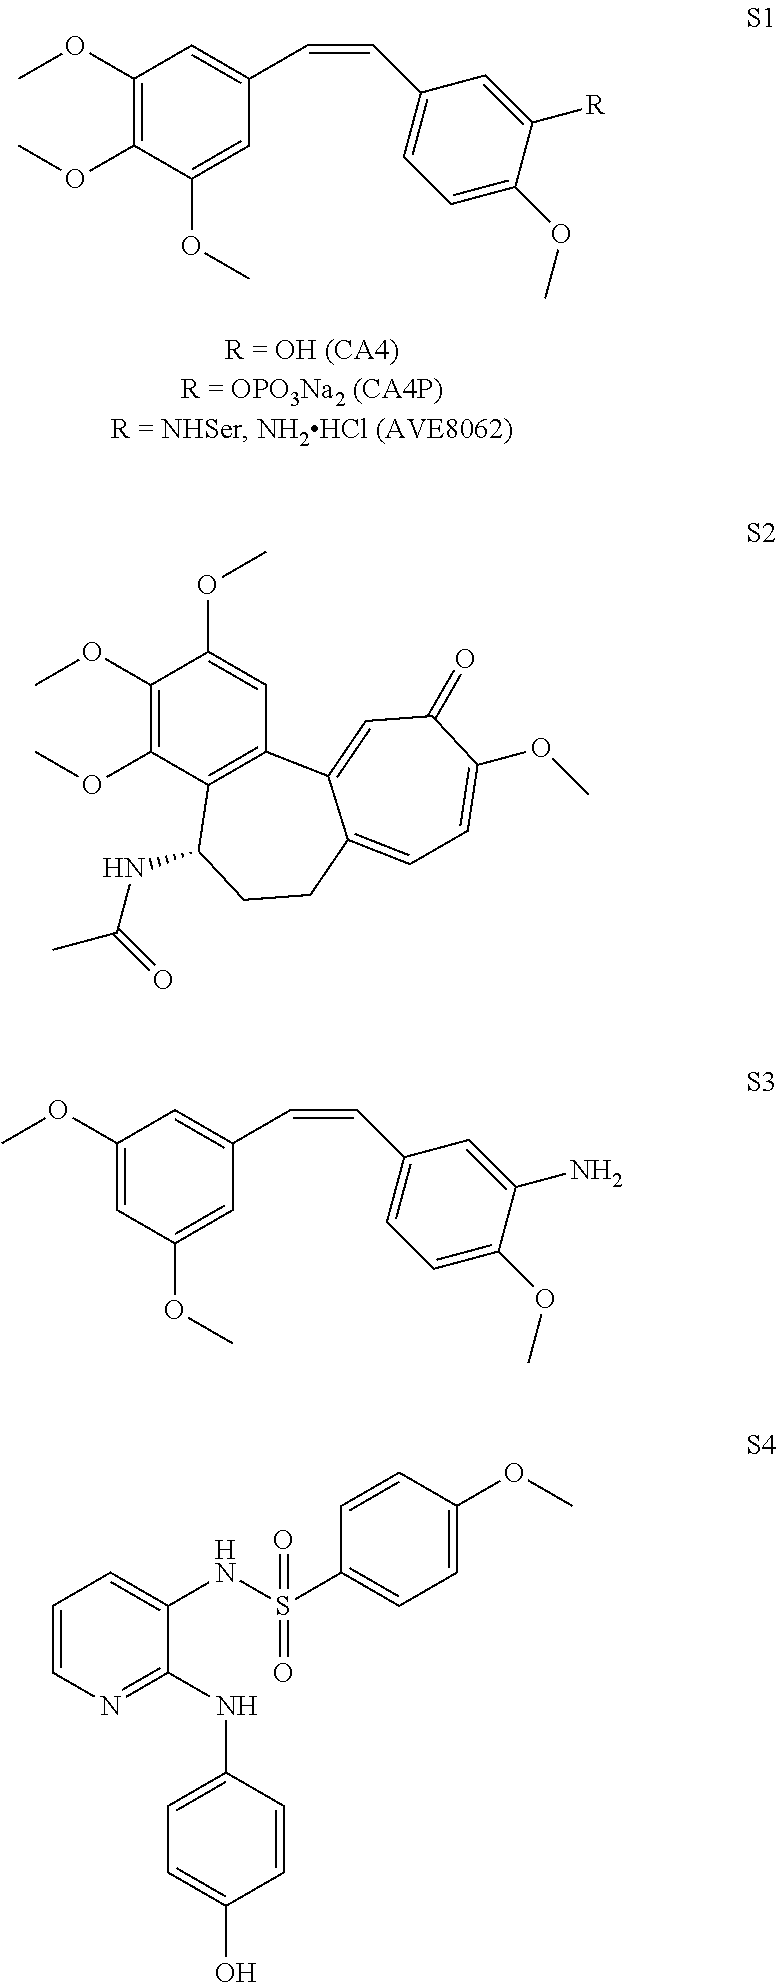 (Z)-3,4,5-trimethoxystyrylbenzenesulfonamides as potential anticancer agents